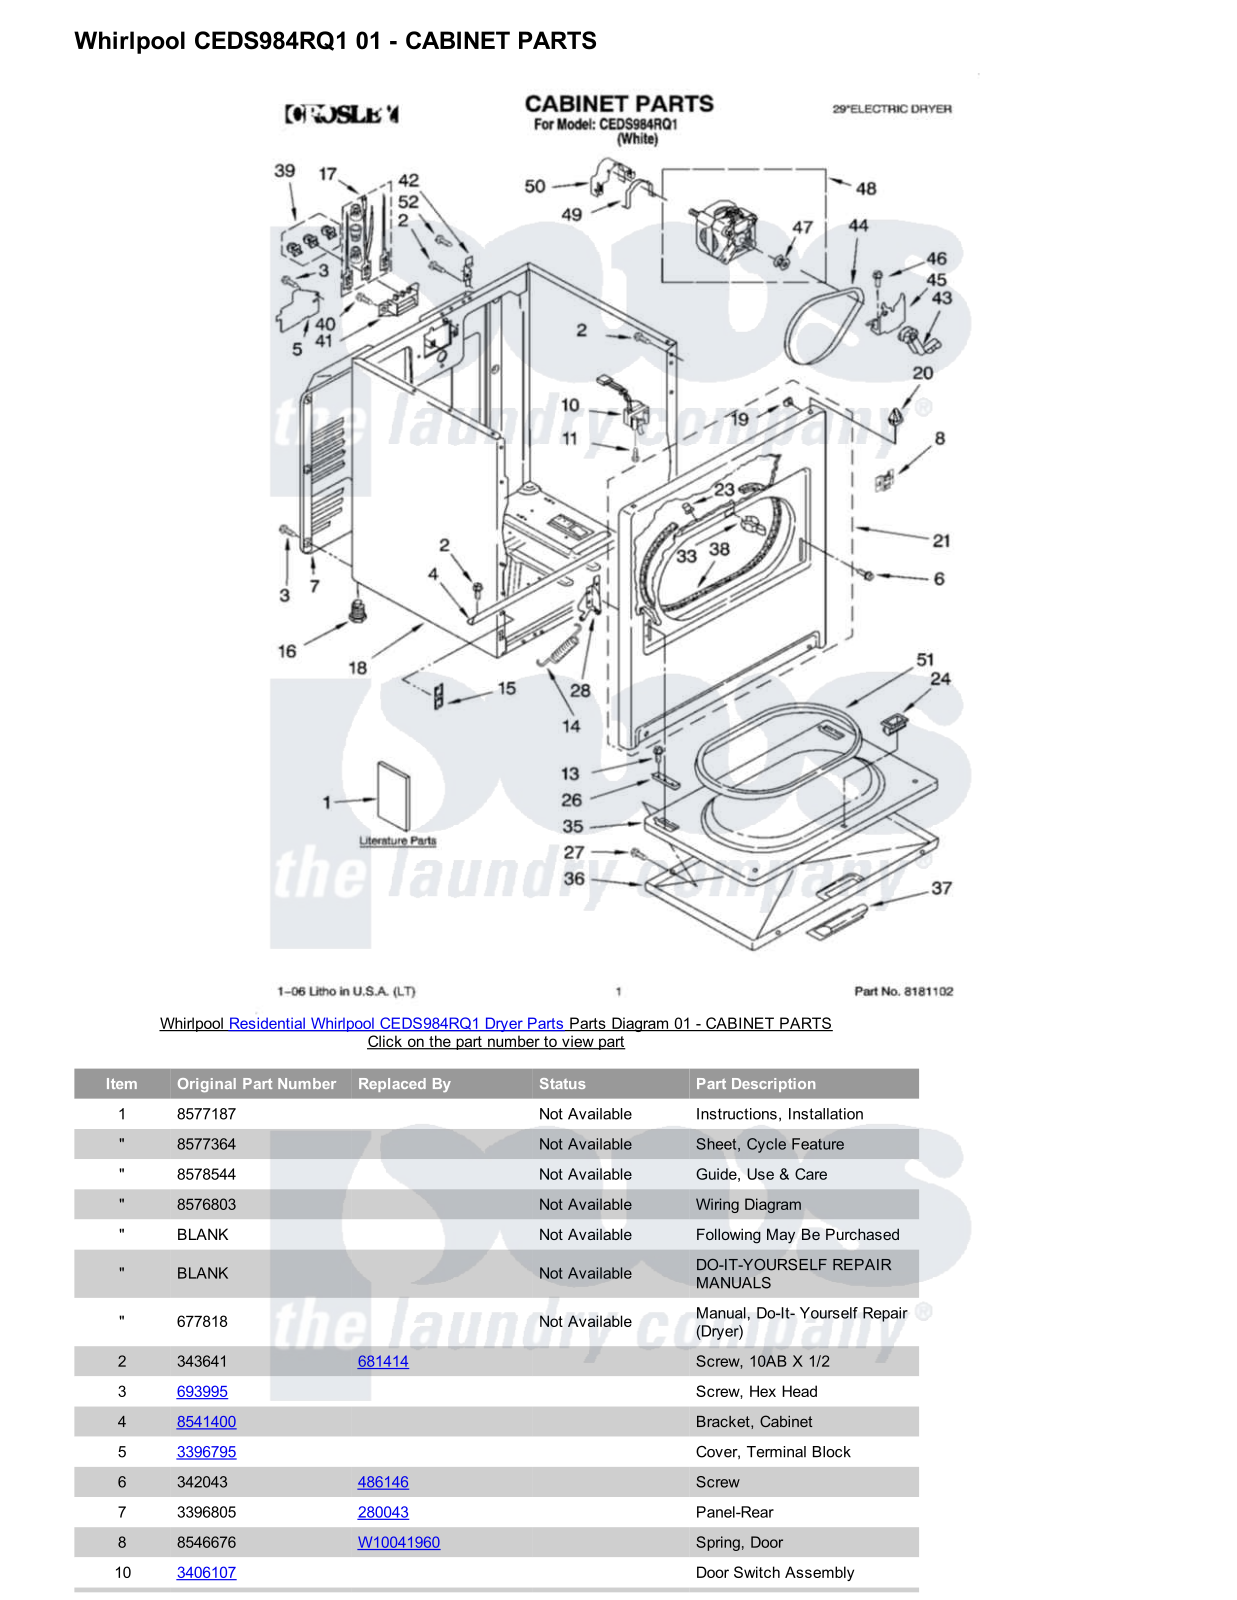 Whirlpool CEDS984RQ1 Parts Diagram